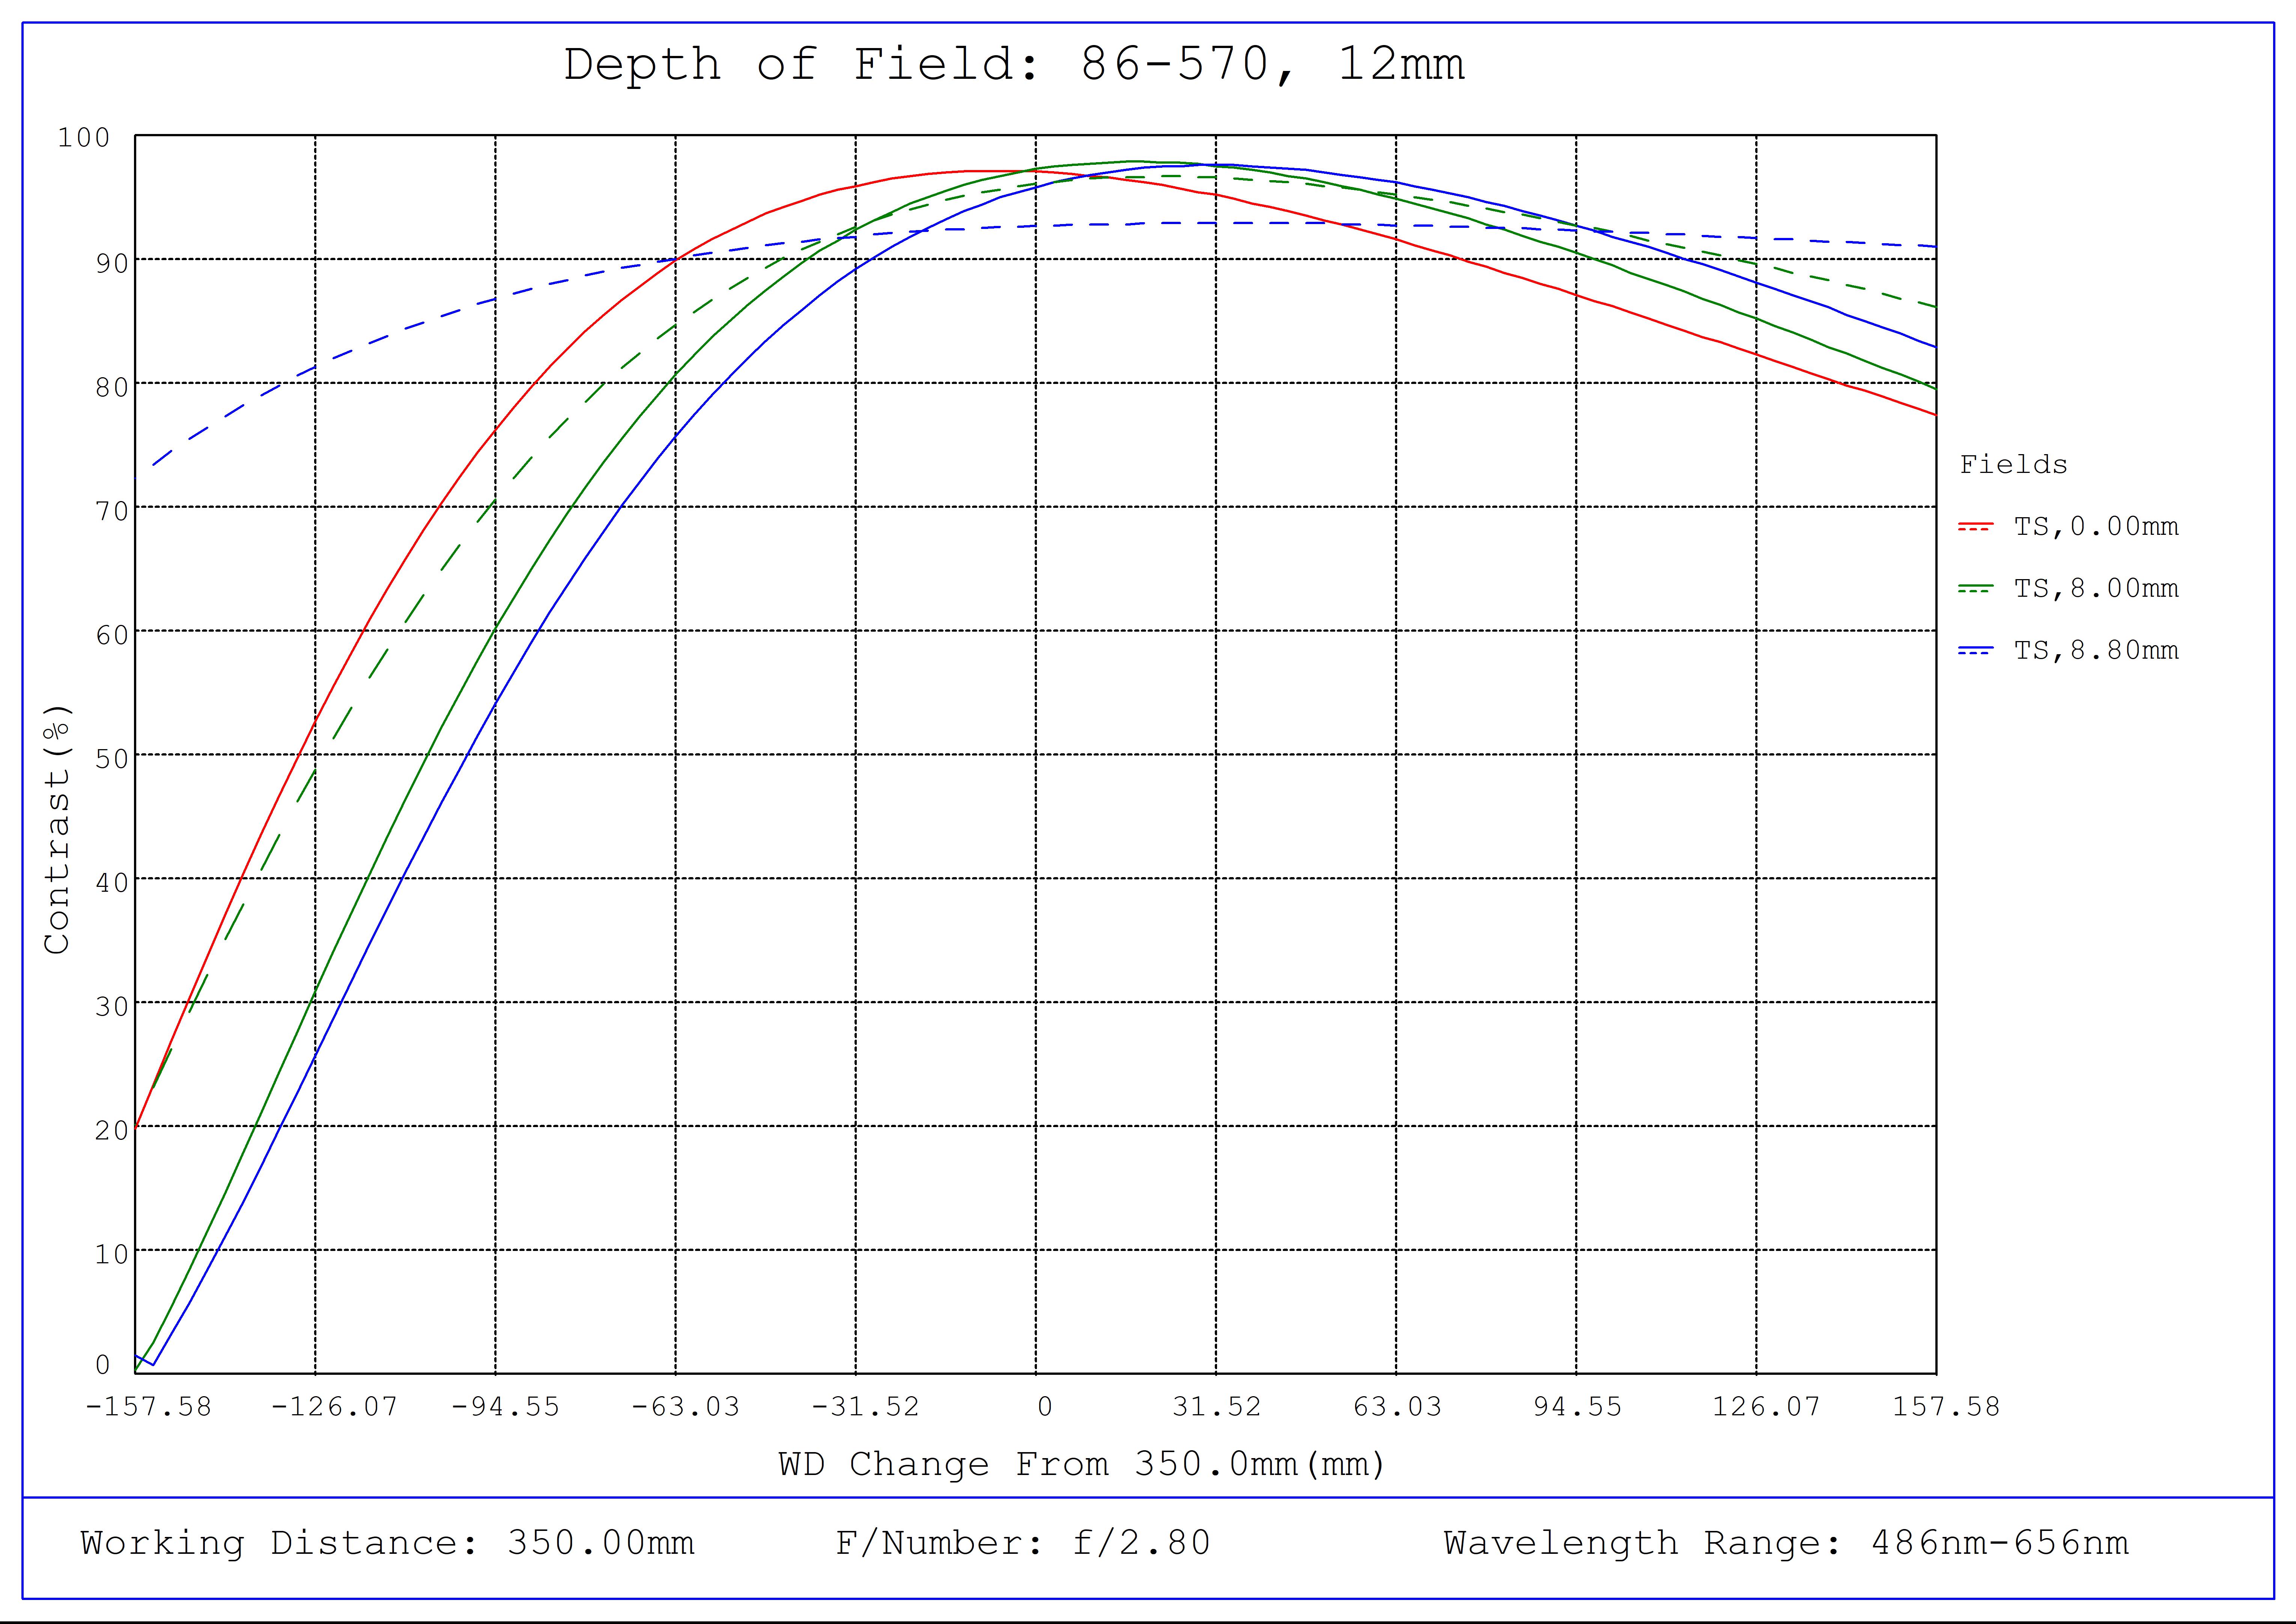 #86-570, 12mm Focal Length, HP Series Fixed Focal Length Lens, Depth of Field Plot, 350mm Working Distance, f2.8